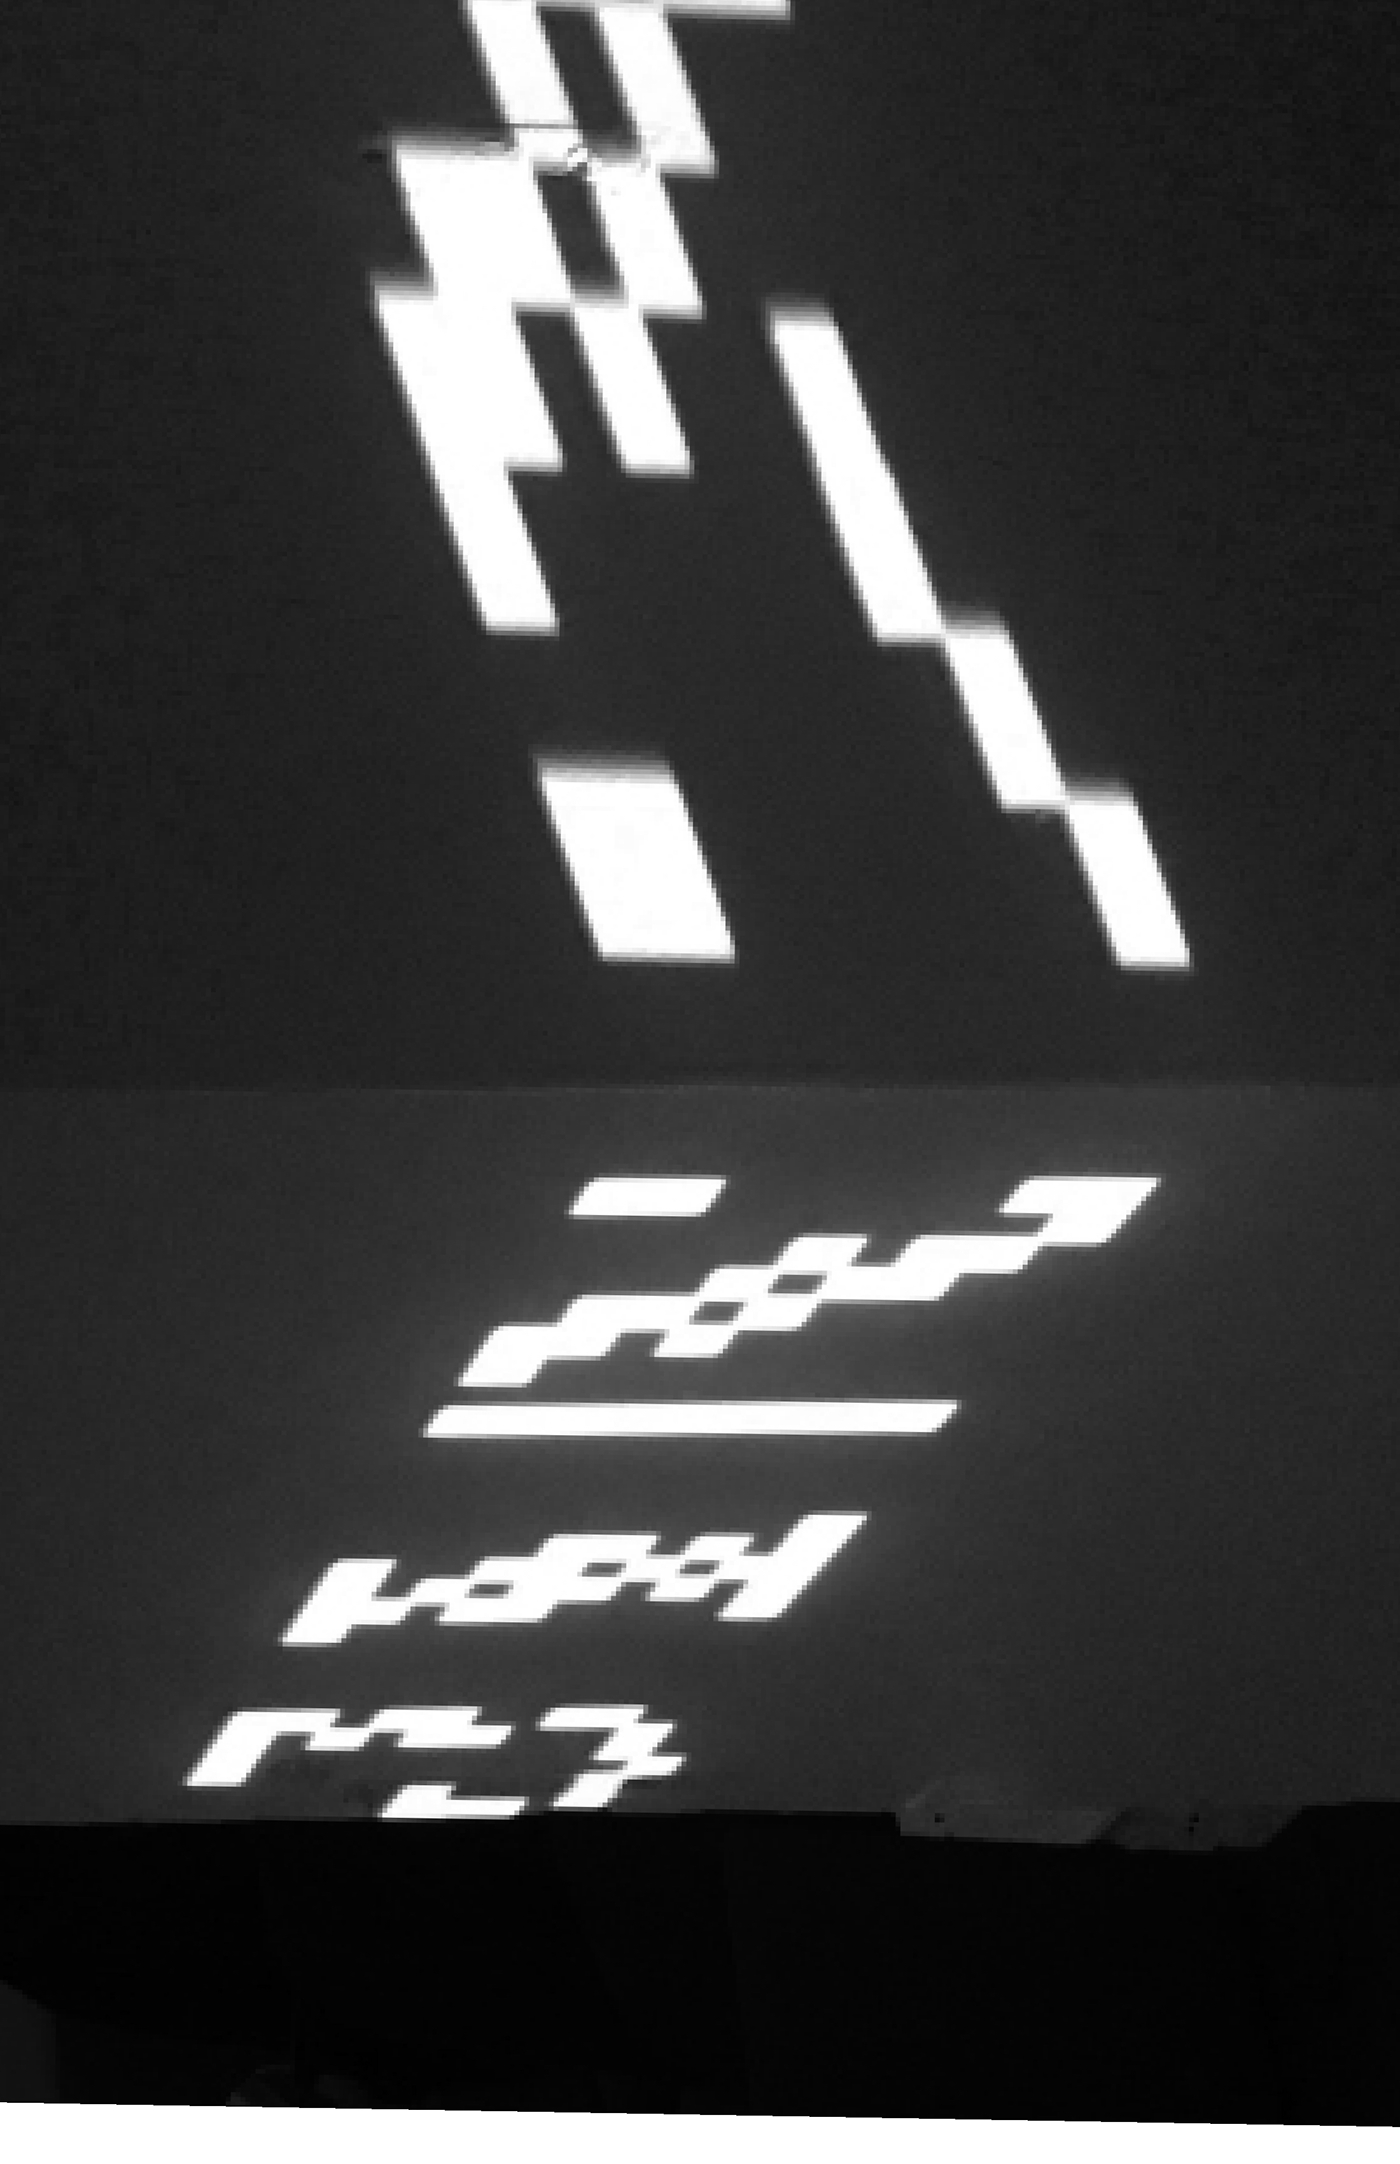 Display type pixel